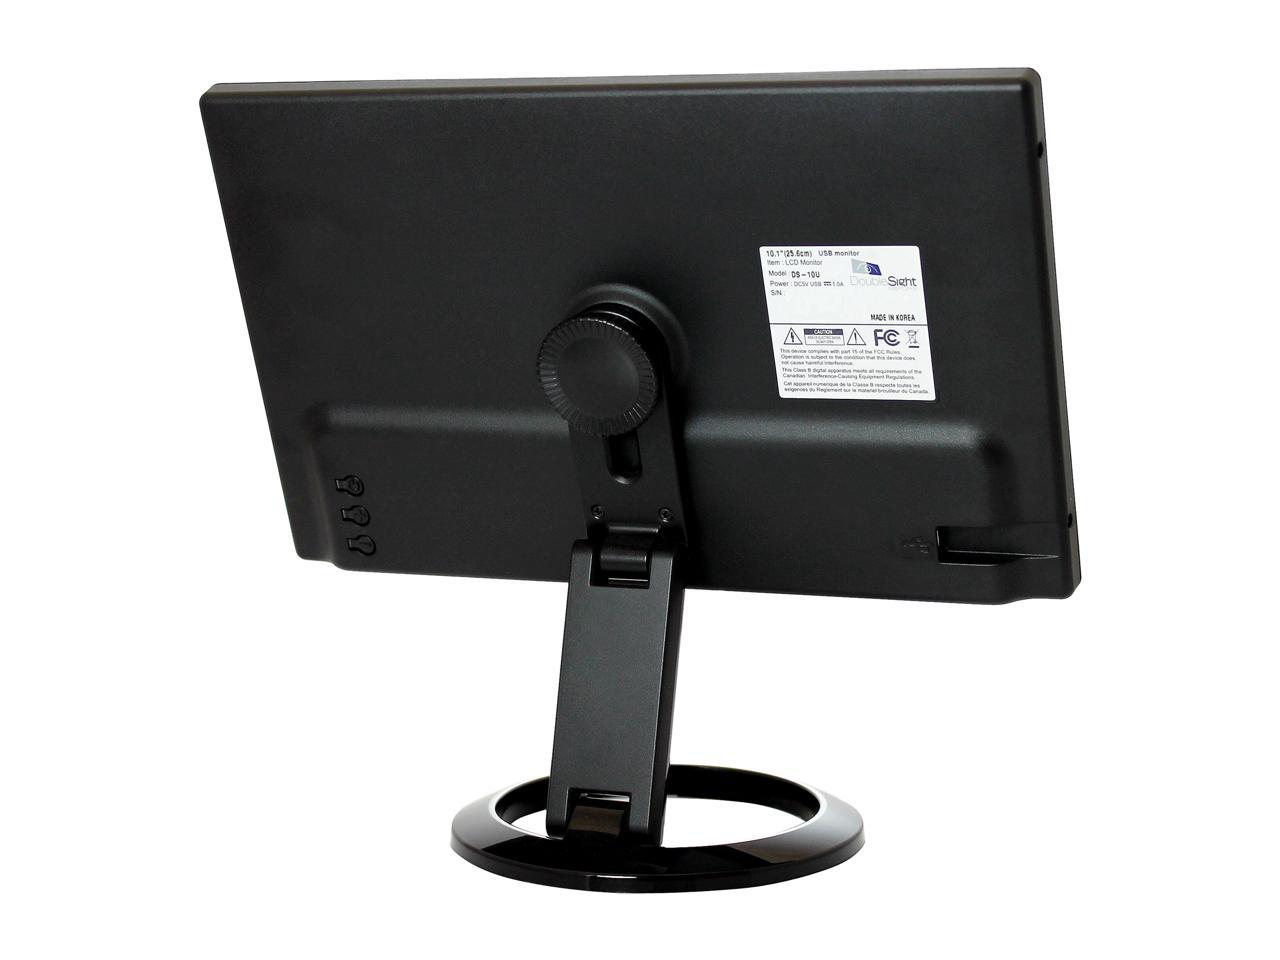 DoubleSight Displays DS-10U 10" LCD Monitor - 16 ms